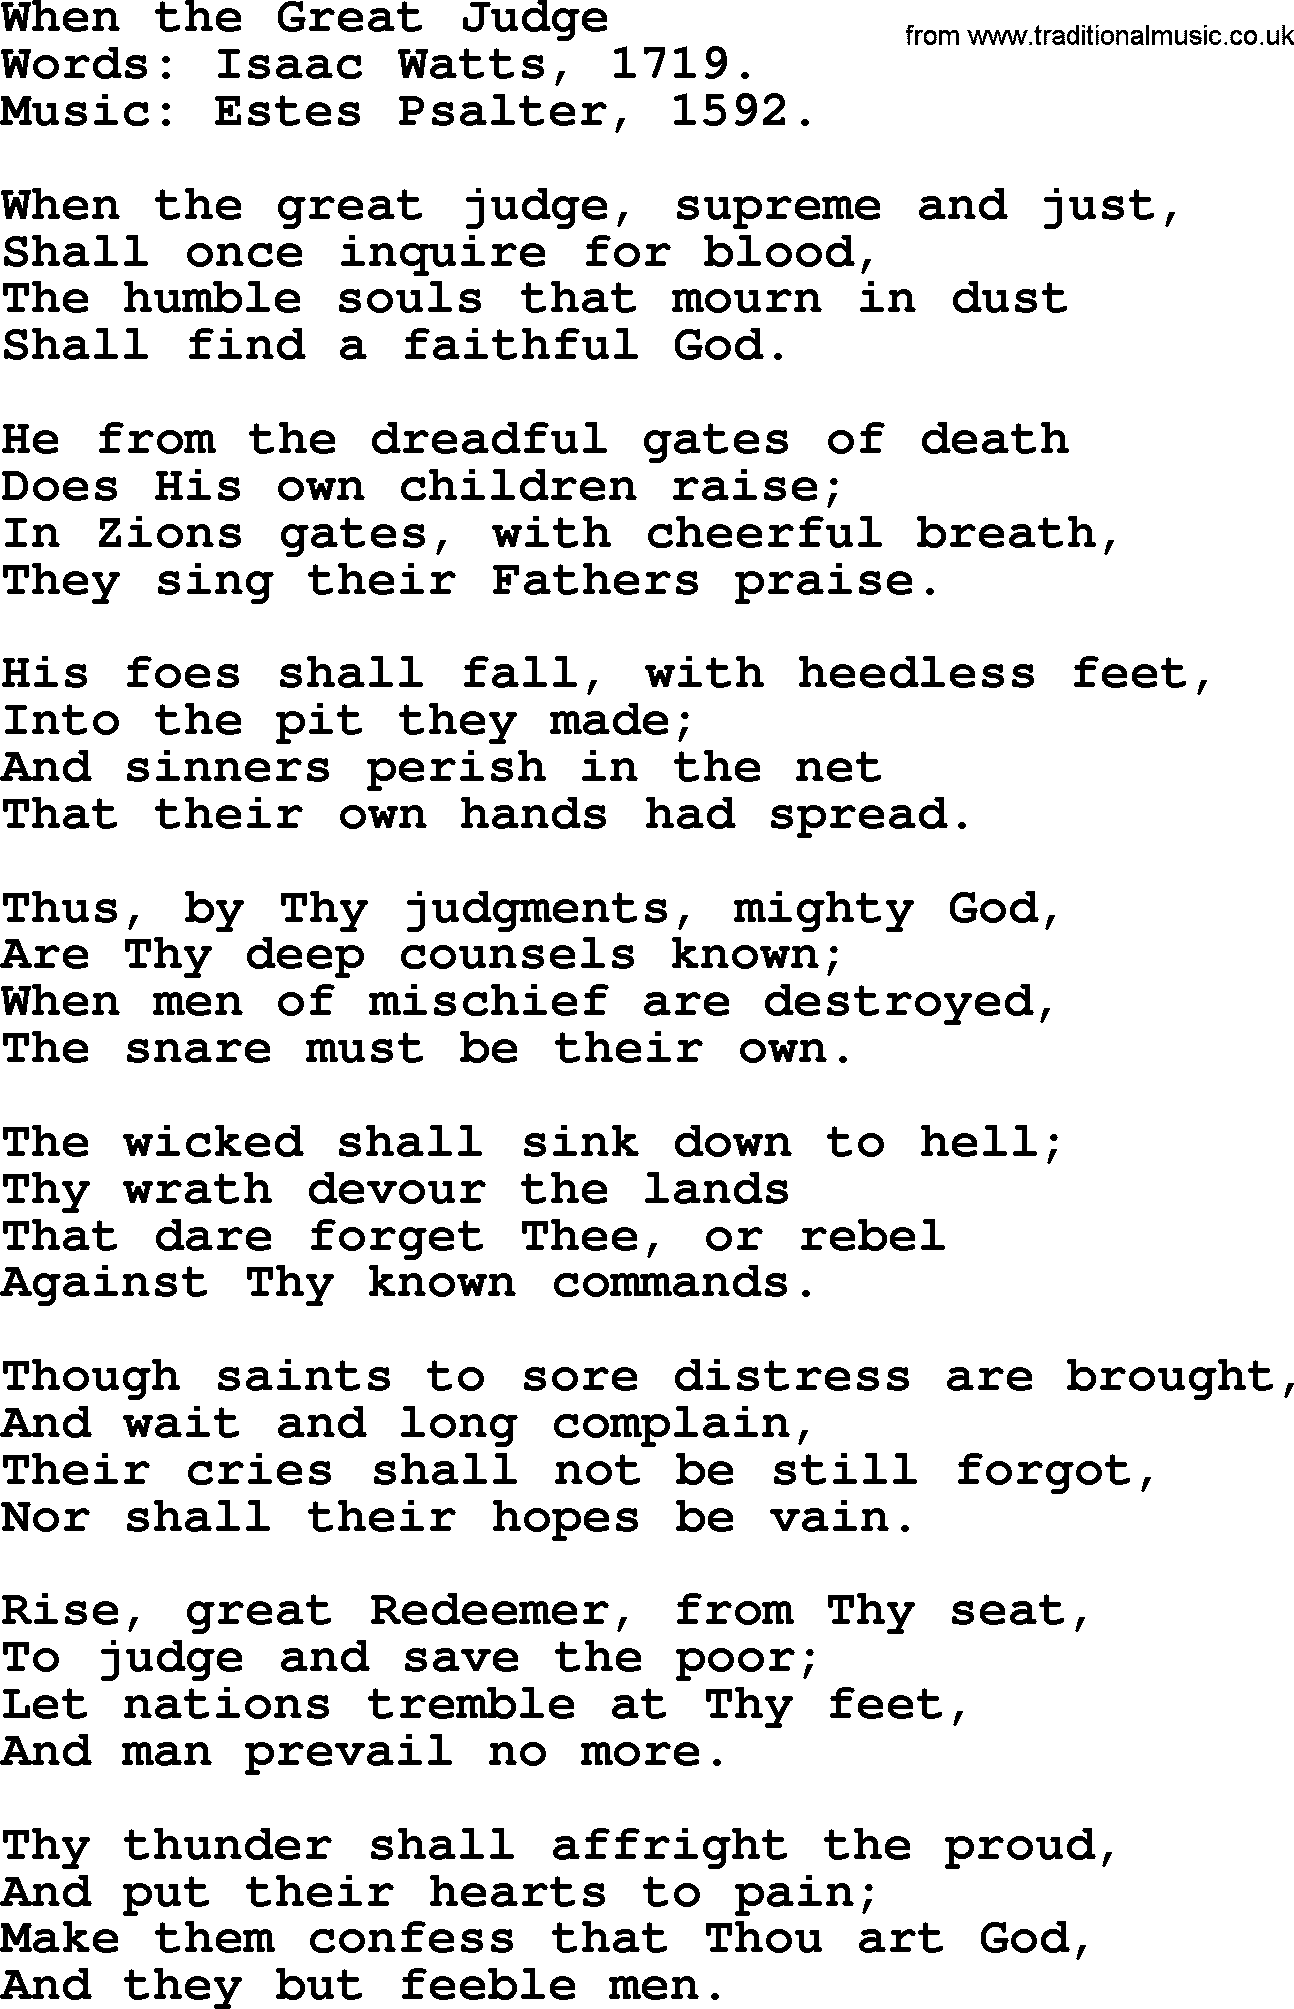 Isaac Watts Christian hymn: When the Great Judge- lyricss